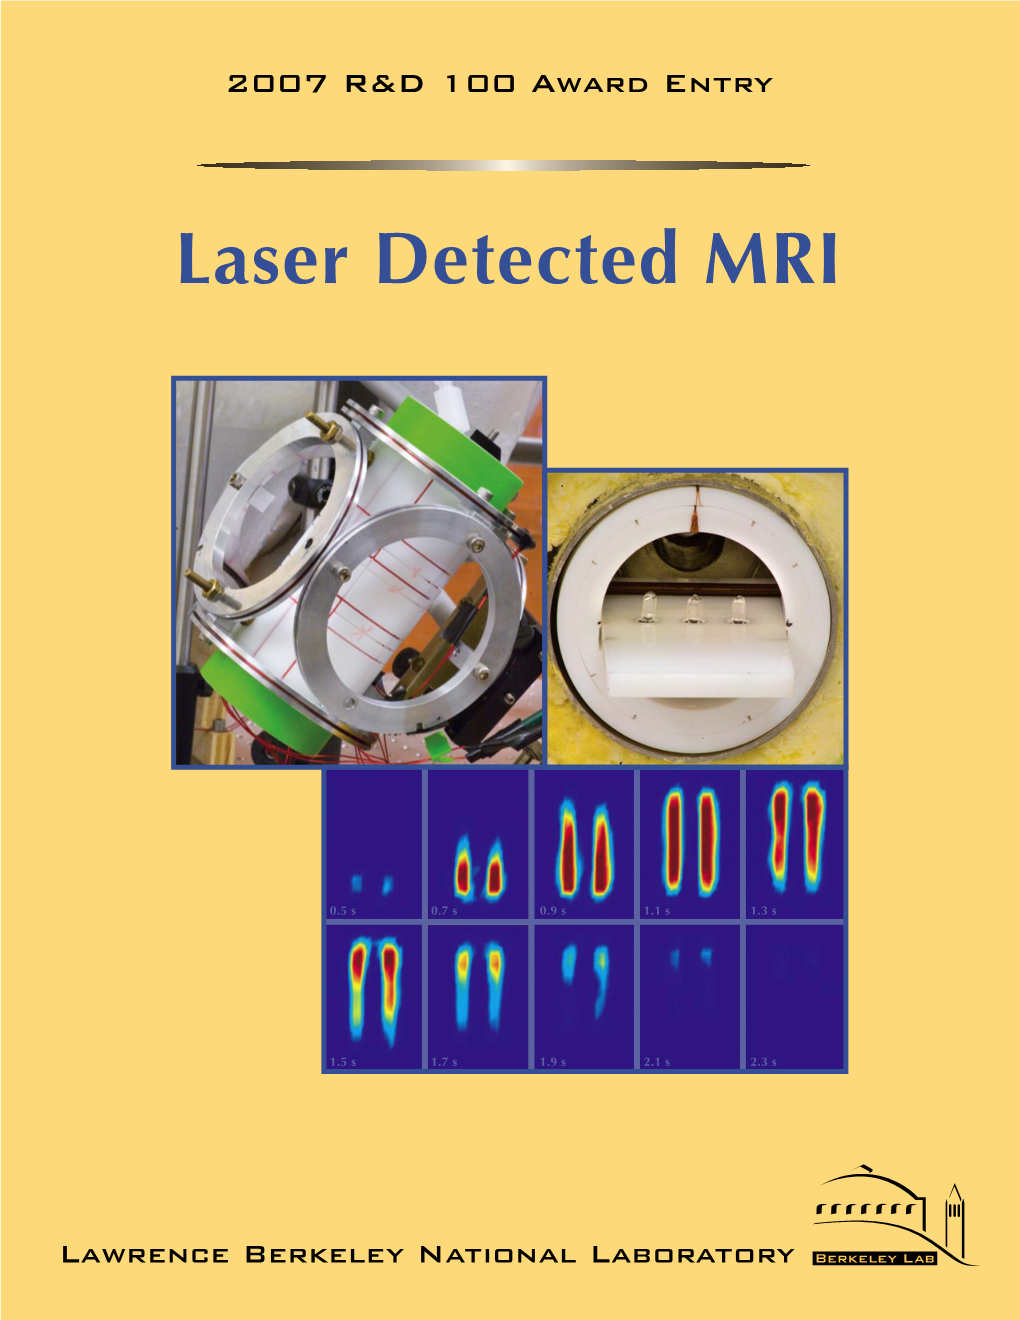 Laser-Detected MRI